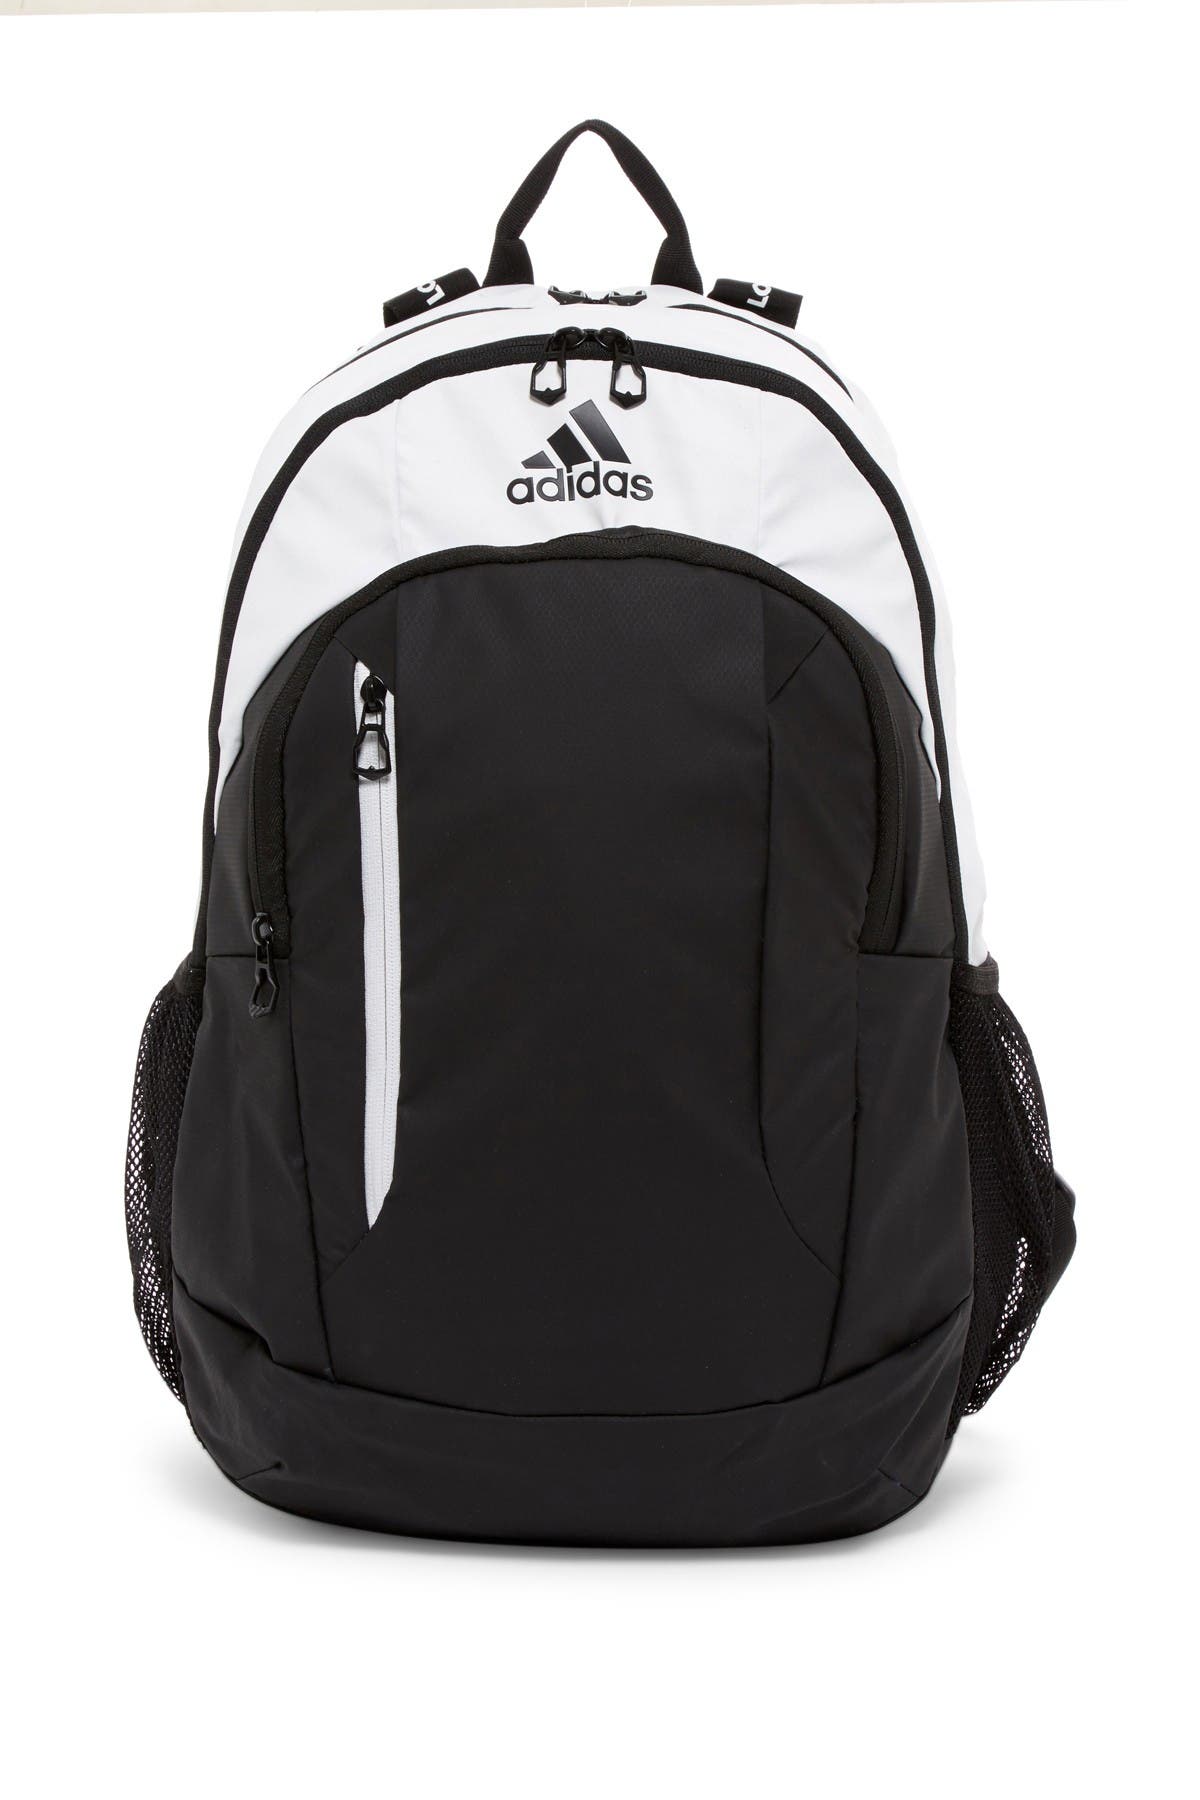 adidas mission plus backpack